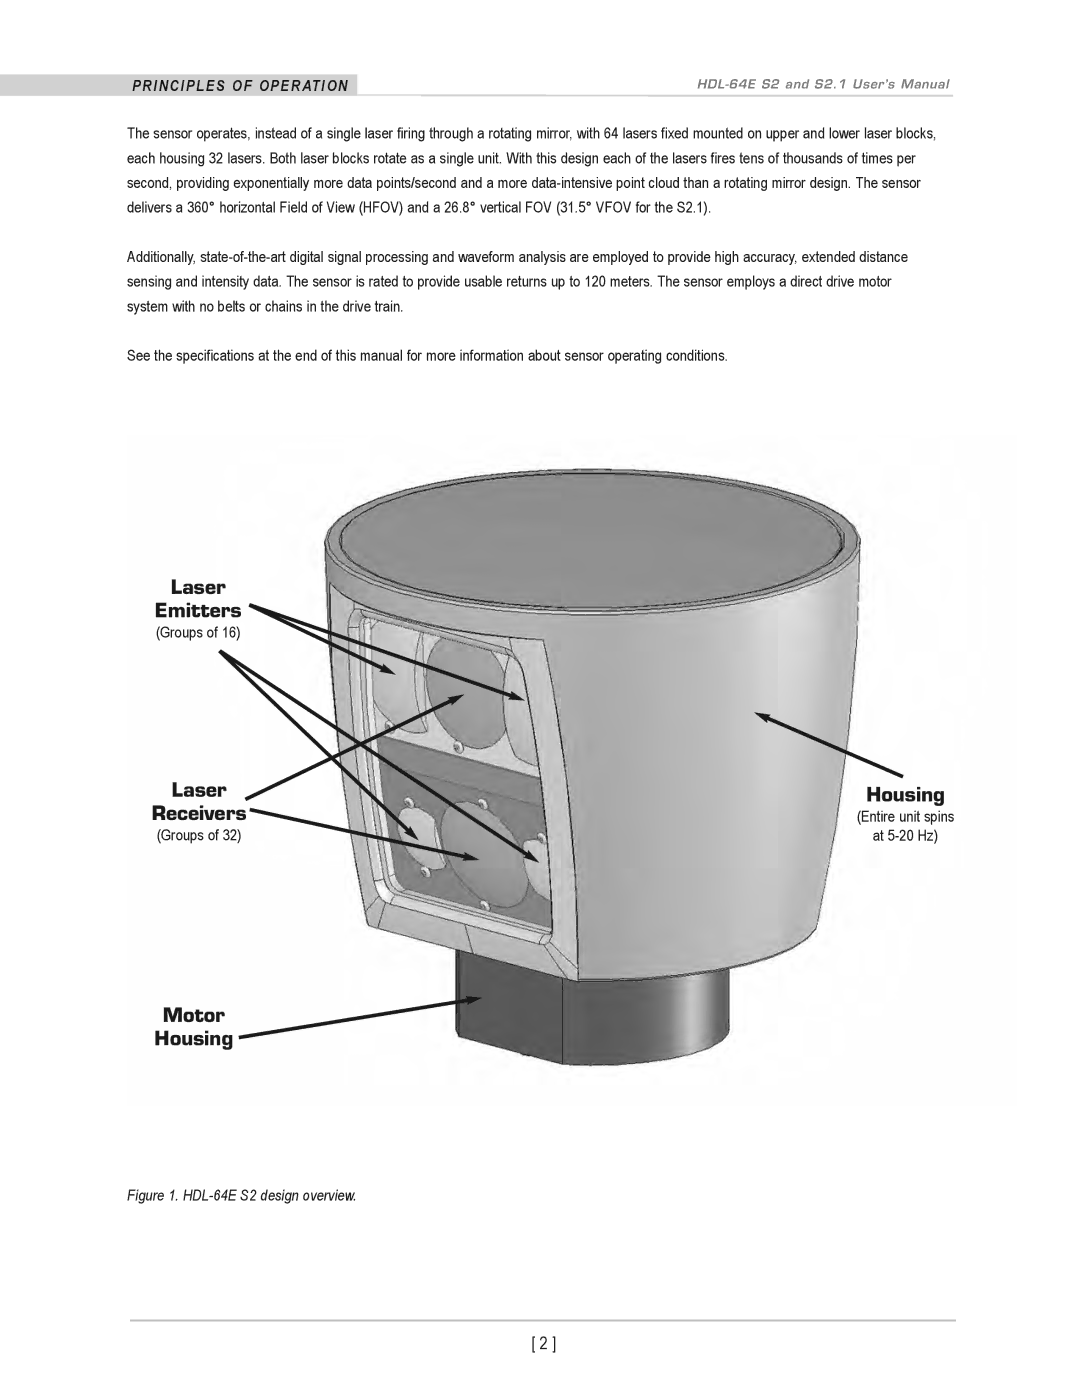 Velodyne Acoustics HDL-64E S2.1 user manual PrinciPLes of oPeration, HDL-64E S2 design overview 